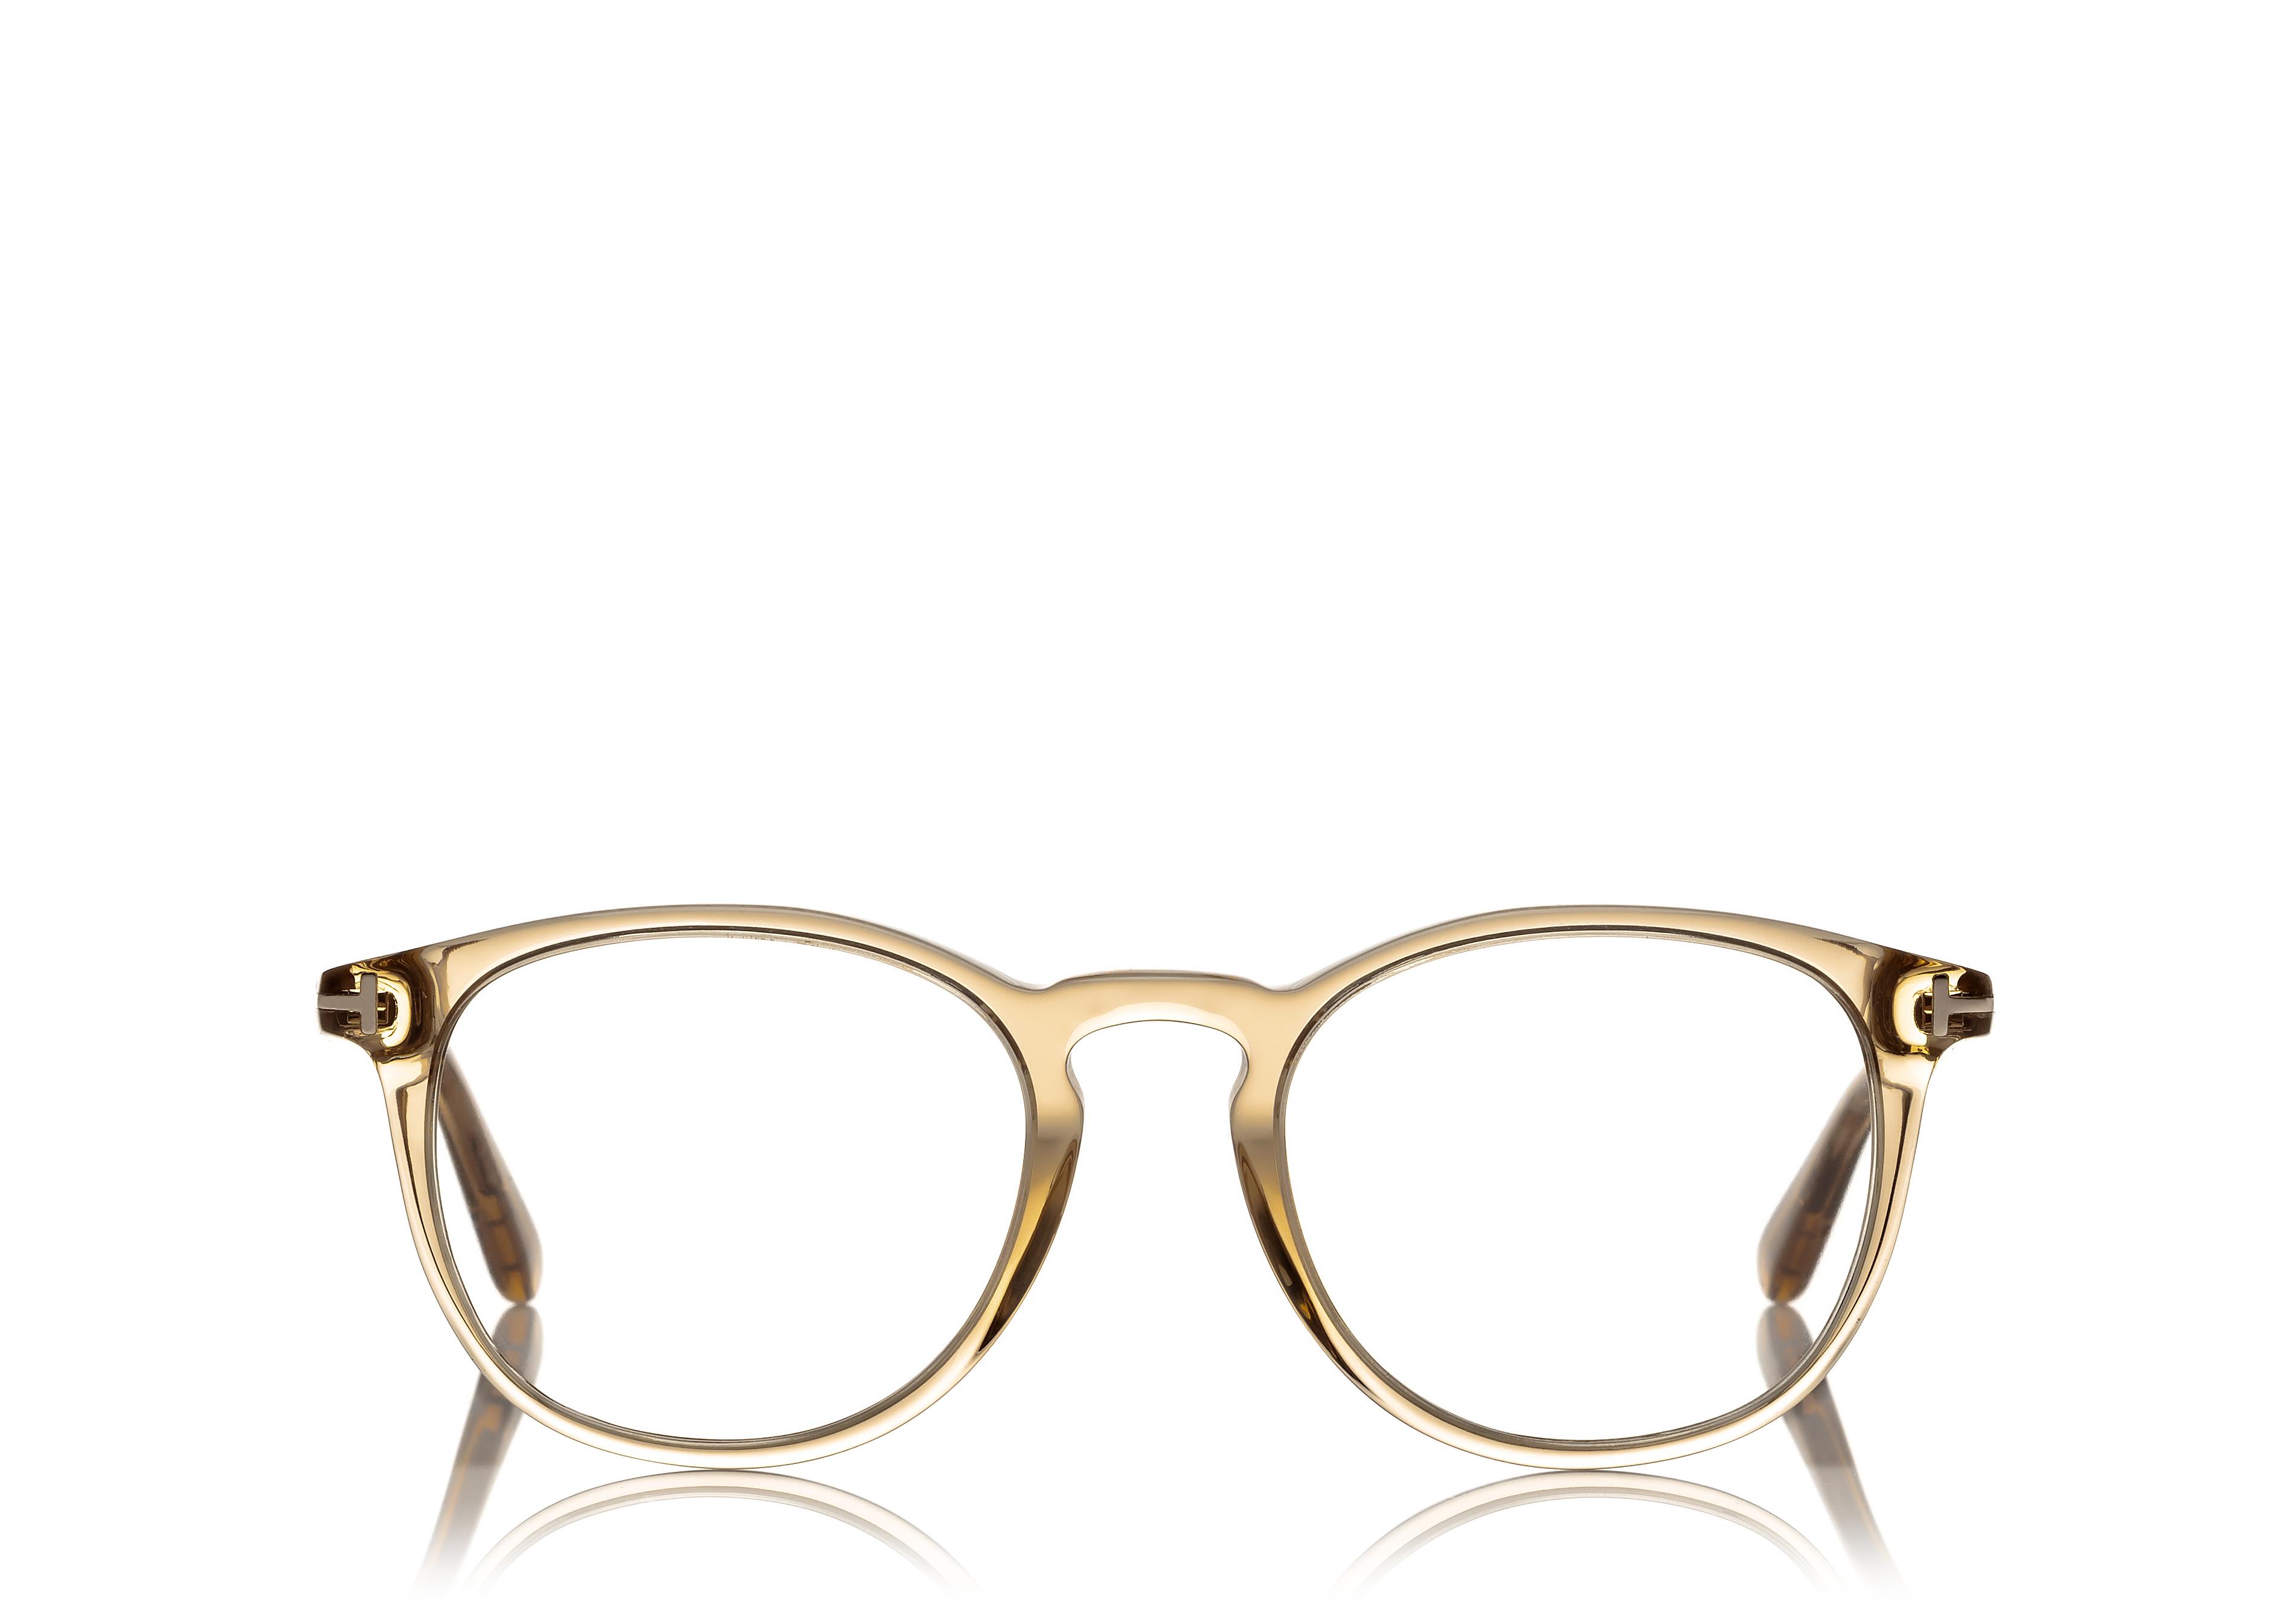 Tom Ford Glasses Frame Sale Shopping, Save 67% | jlcatj.gob.mx